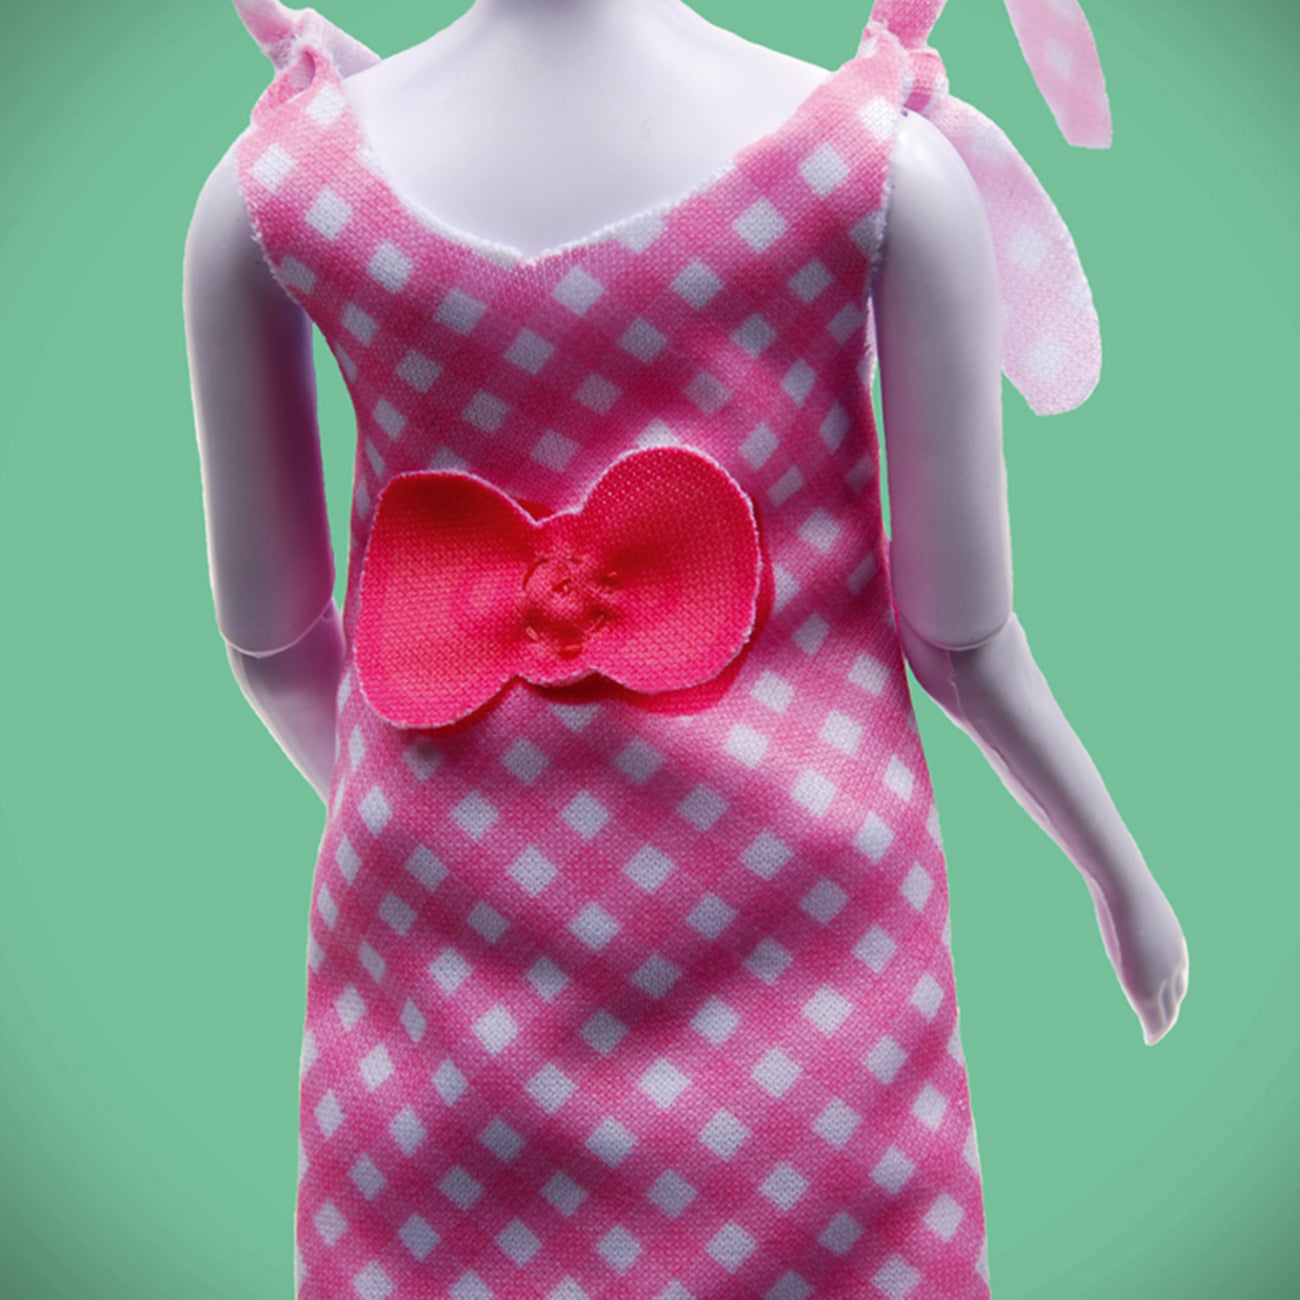 Set de croitorie hainute pentru papusi Couture Hello Kitty Dreams, Dress Your Doll